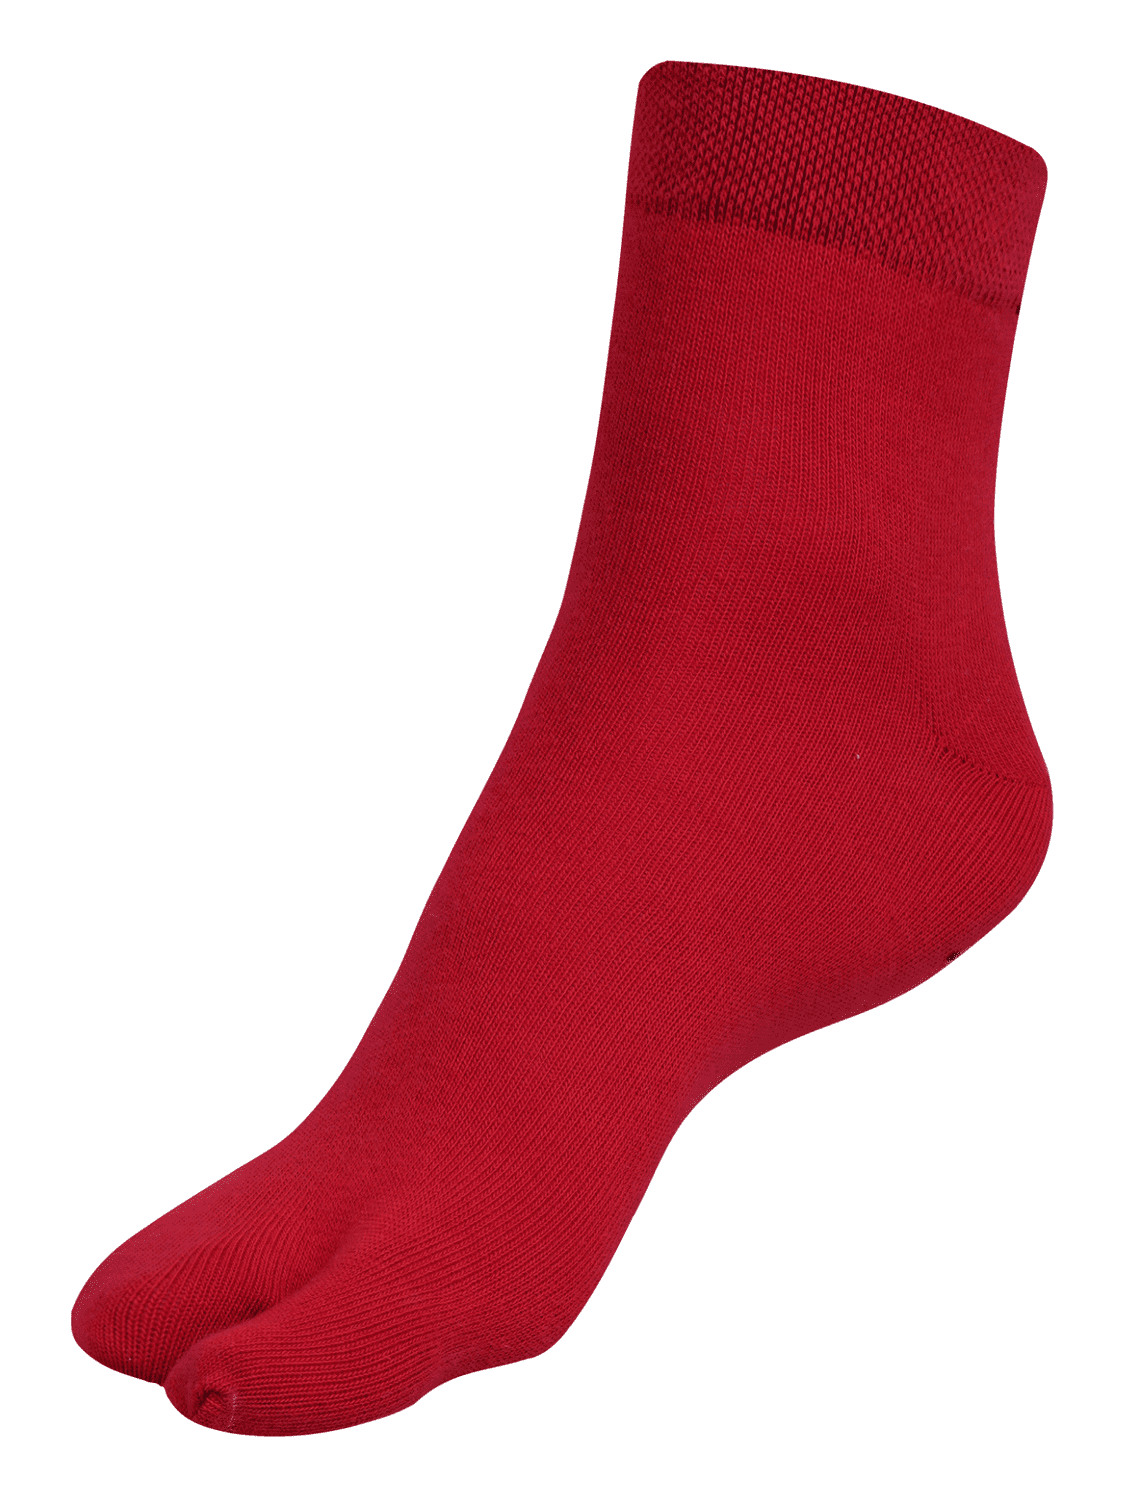 Ankle Length Thumb Socks - Red